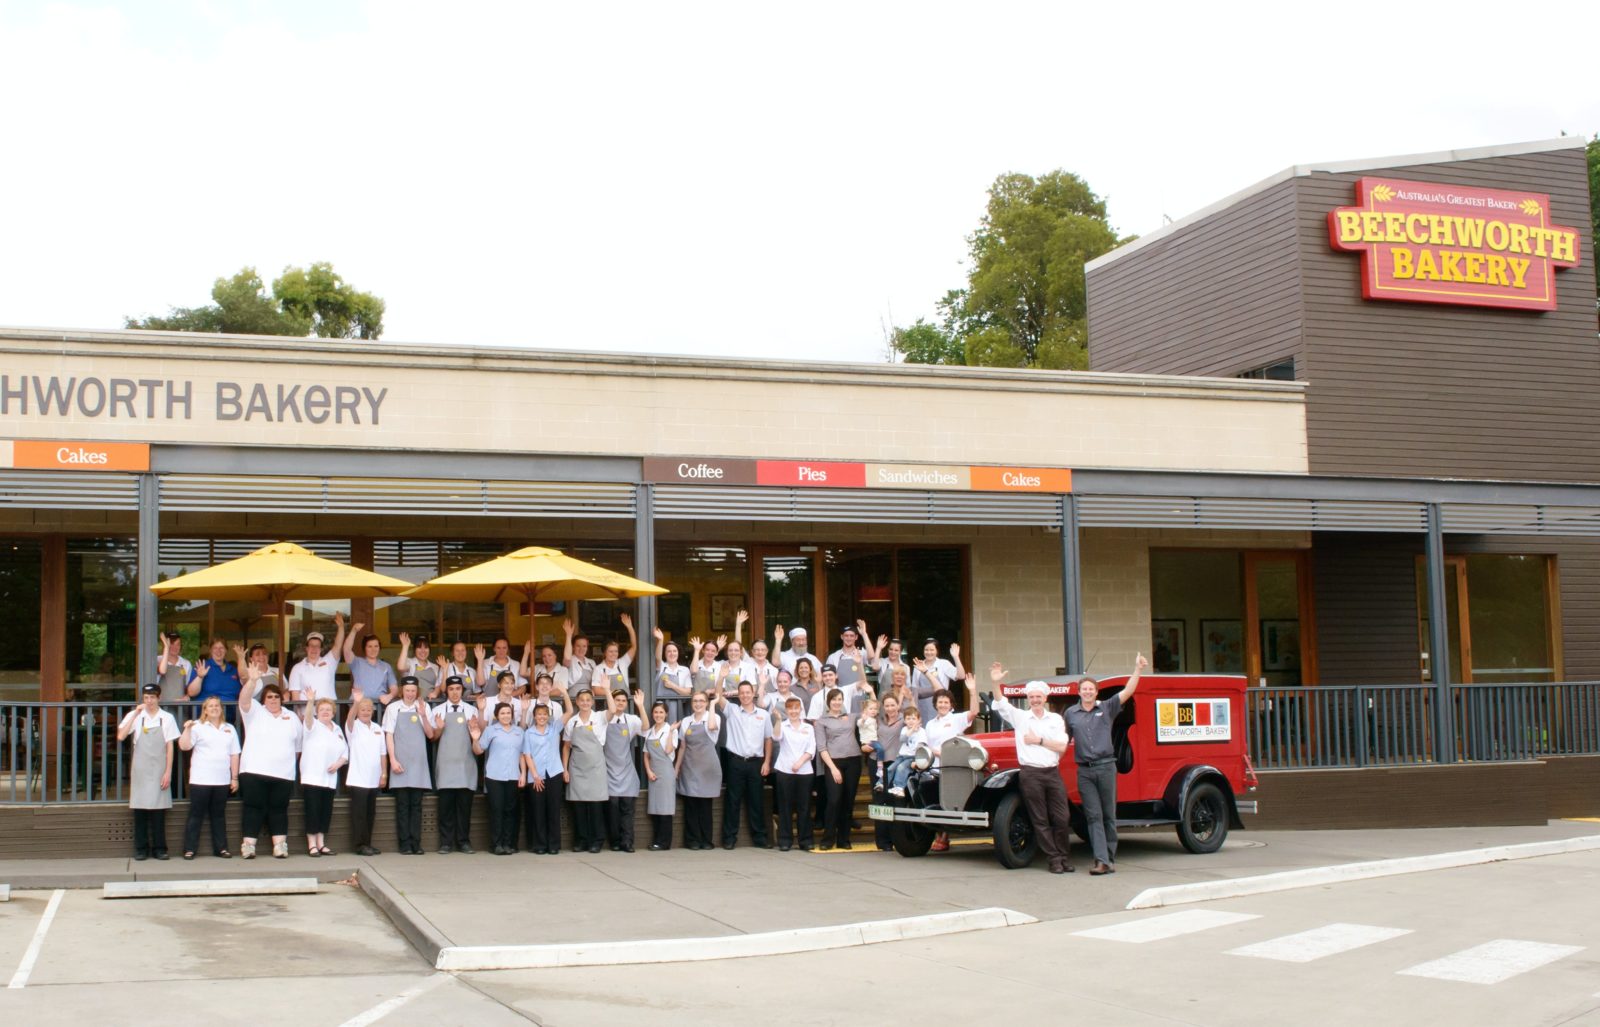 Beechworth Bakery Healesville staff welcome you